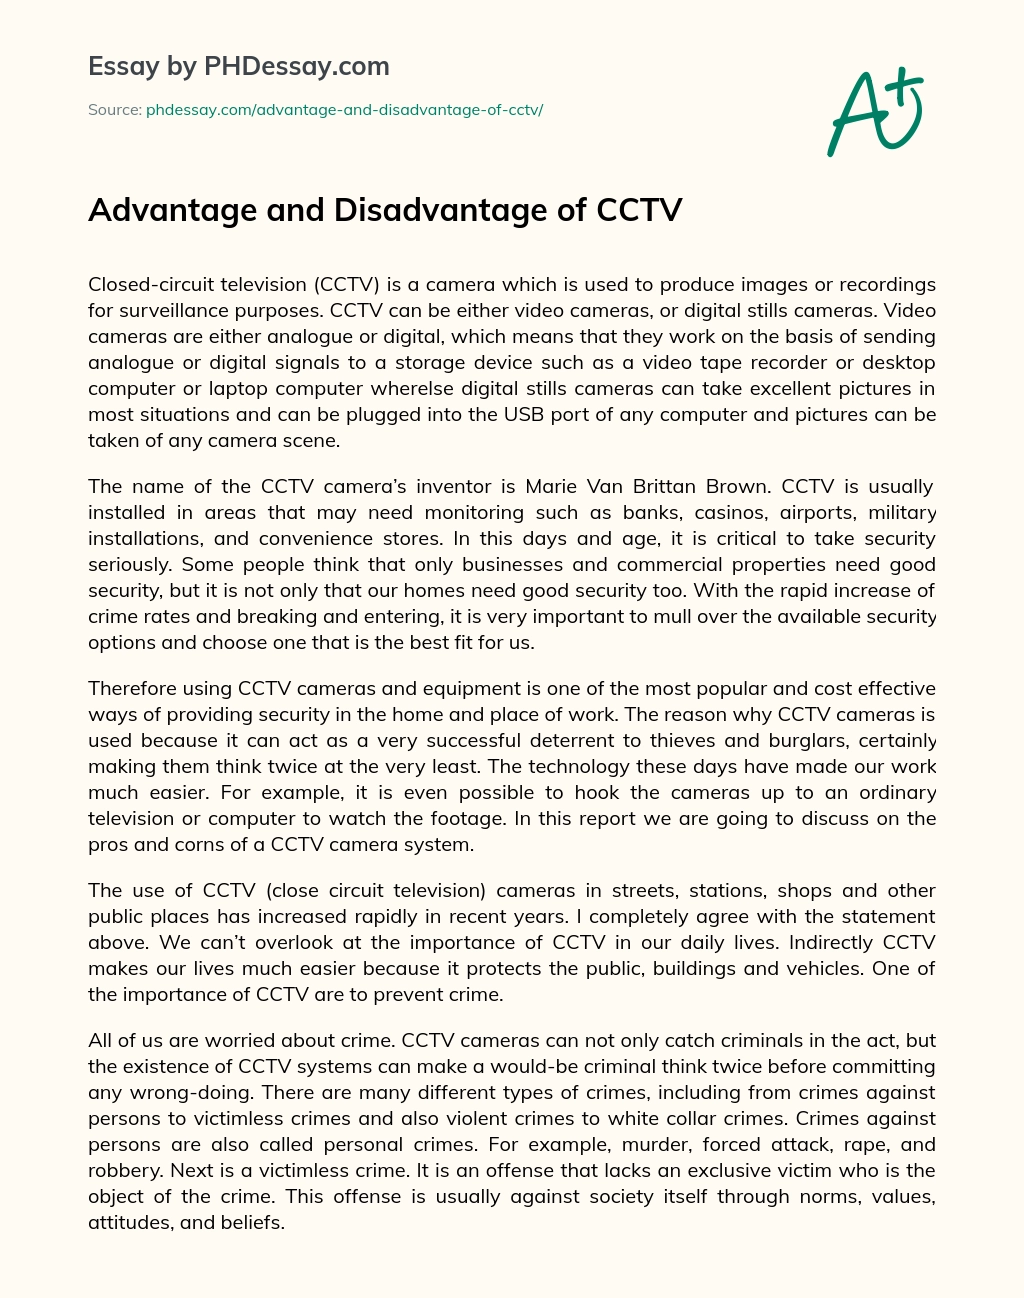 Advantage and Disadvantage of CCTV essay